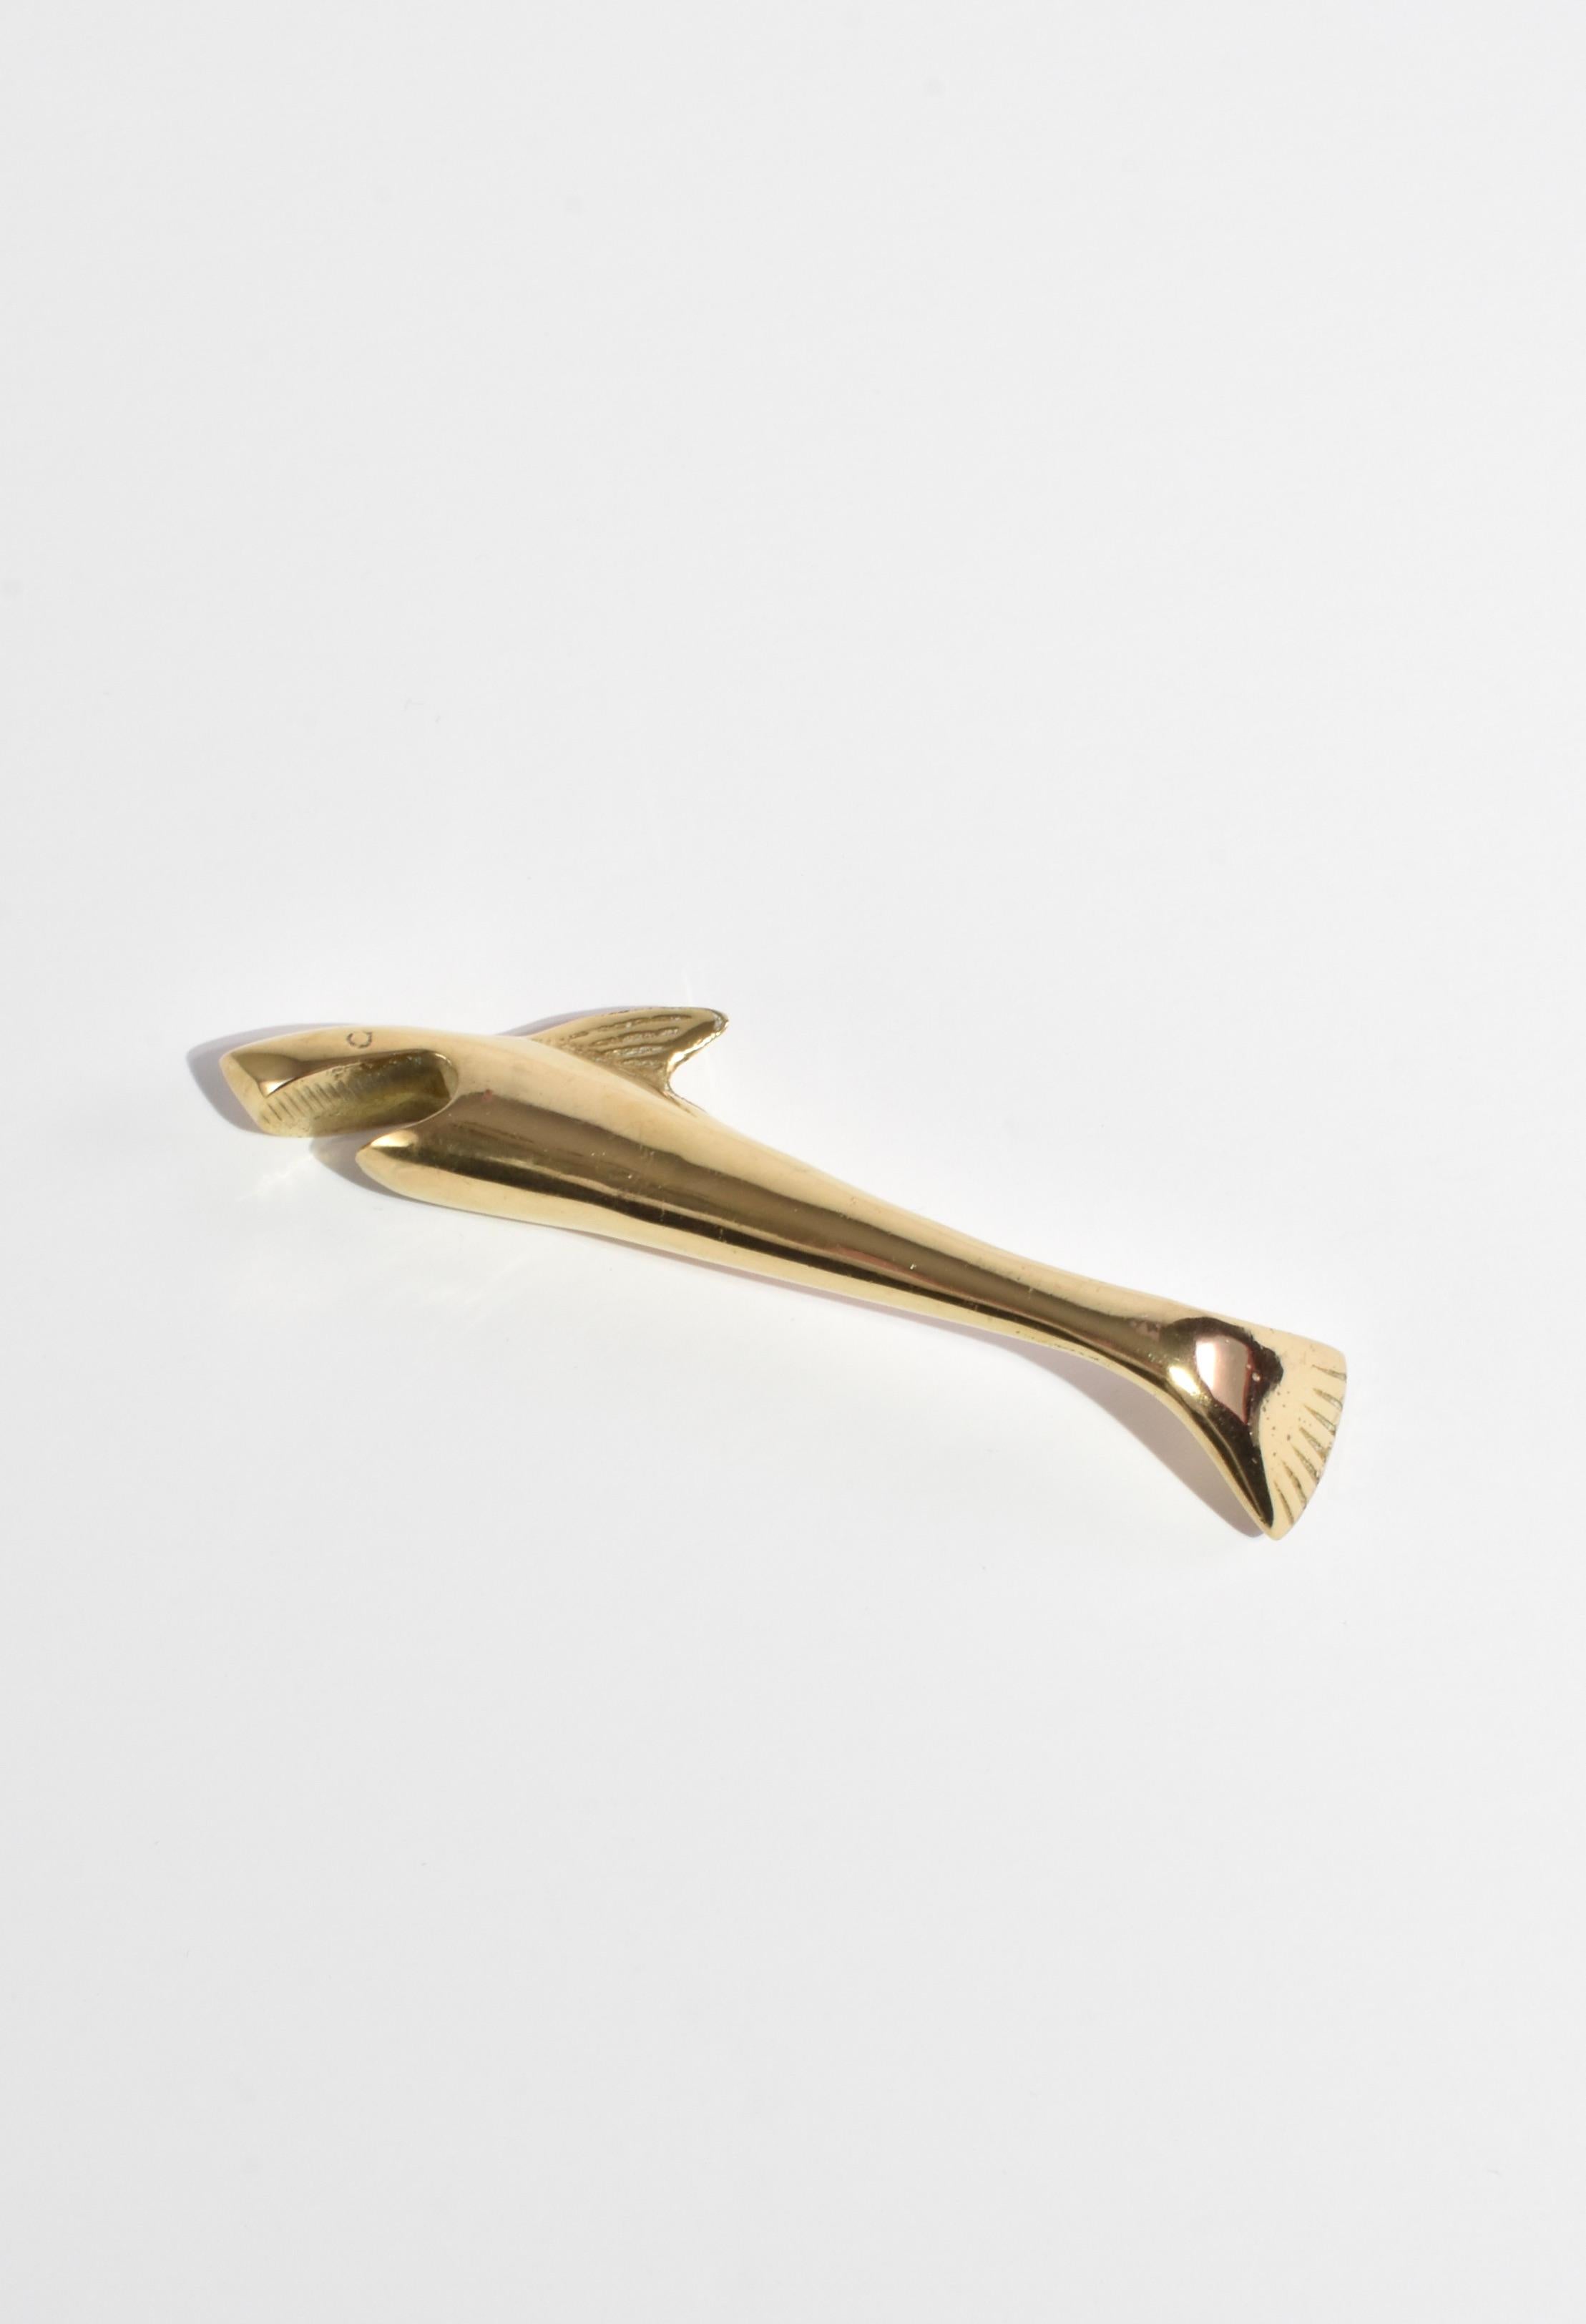 Vintage brass bottle opener in the shape of a shark.